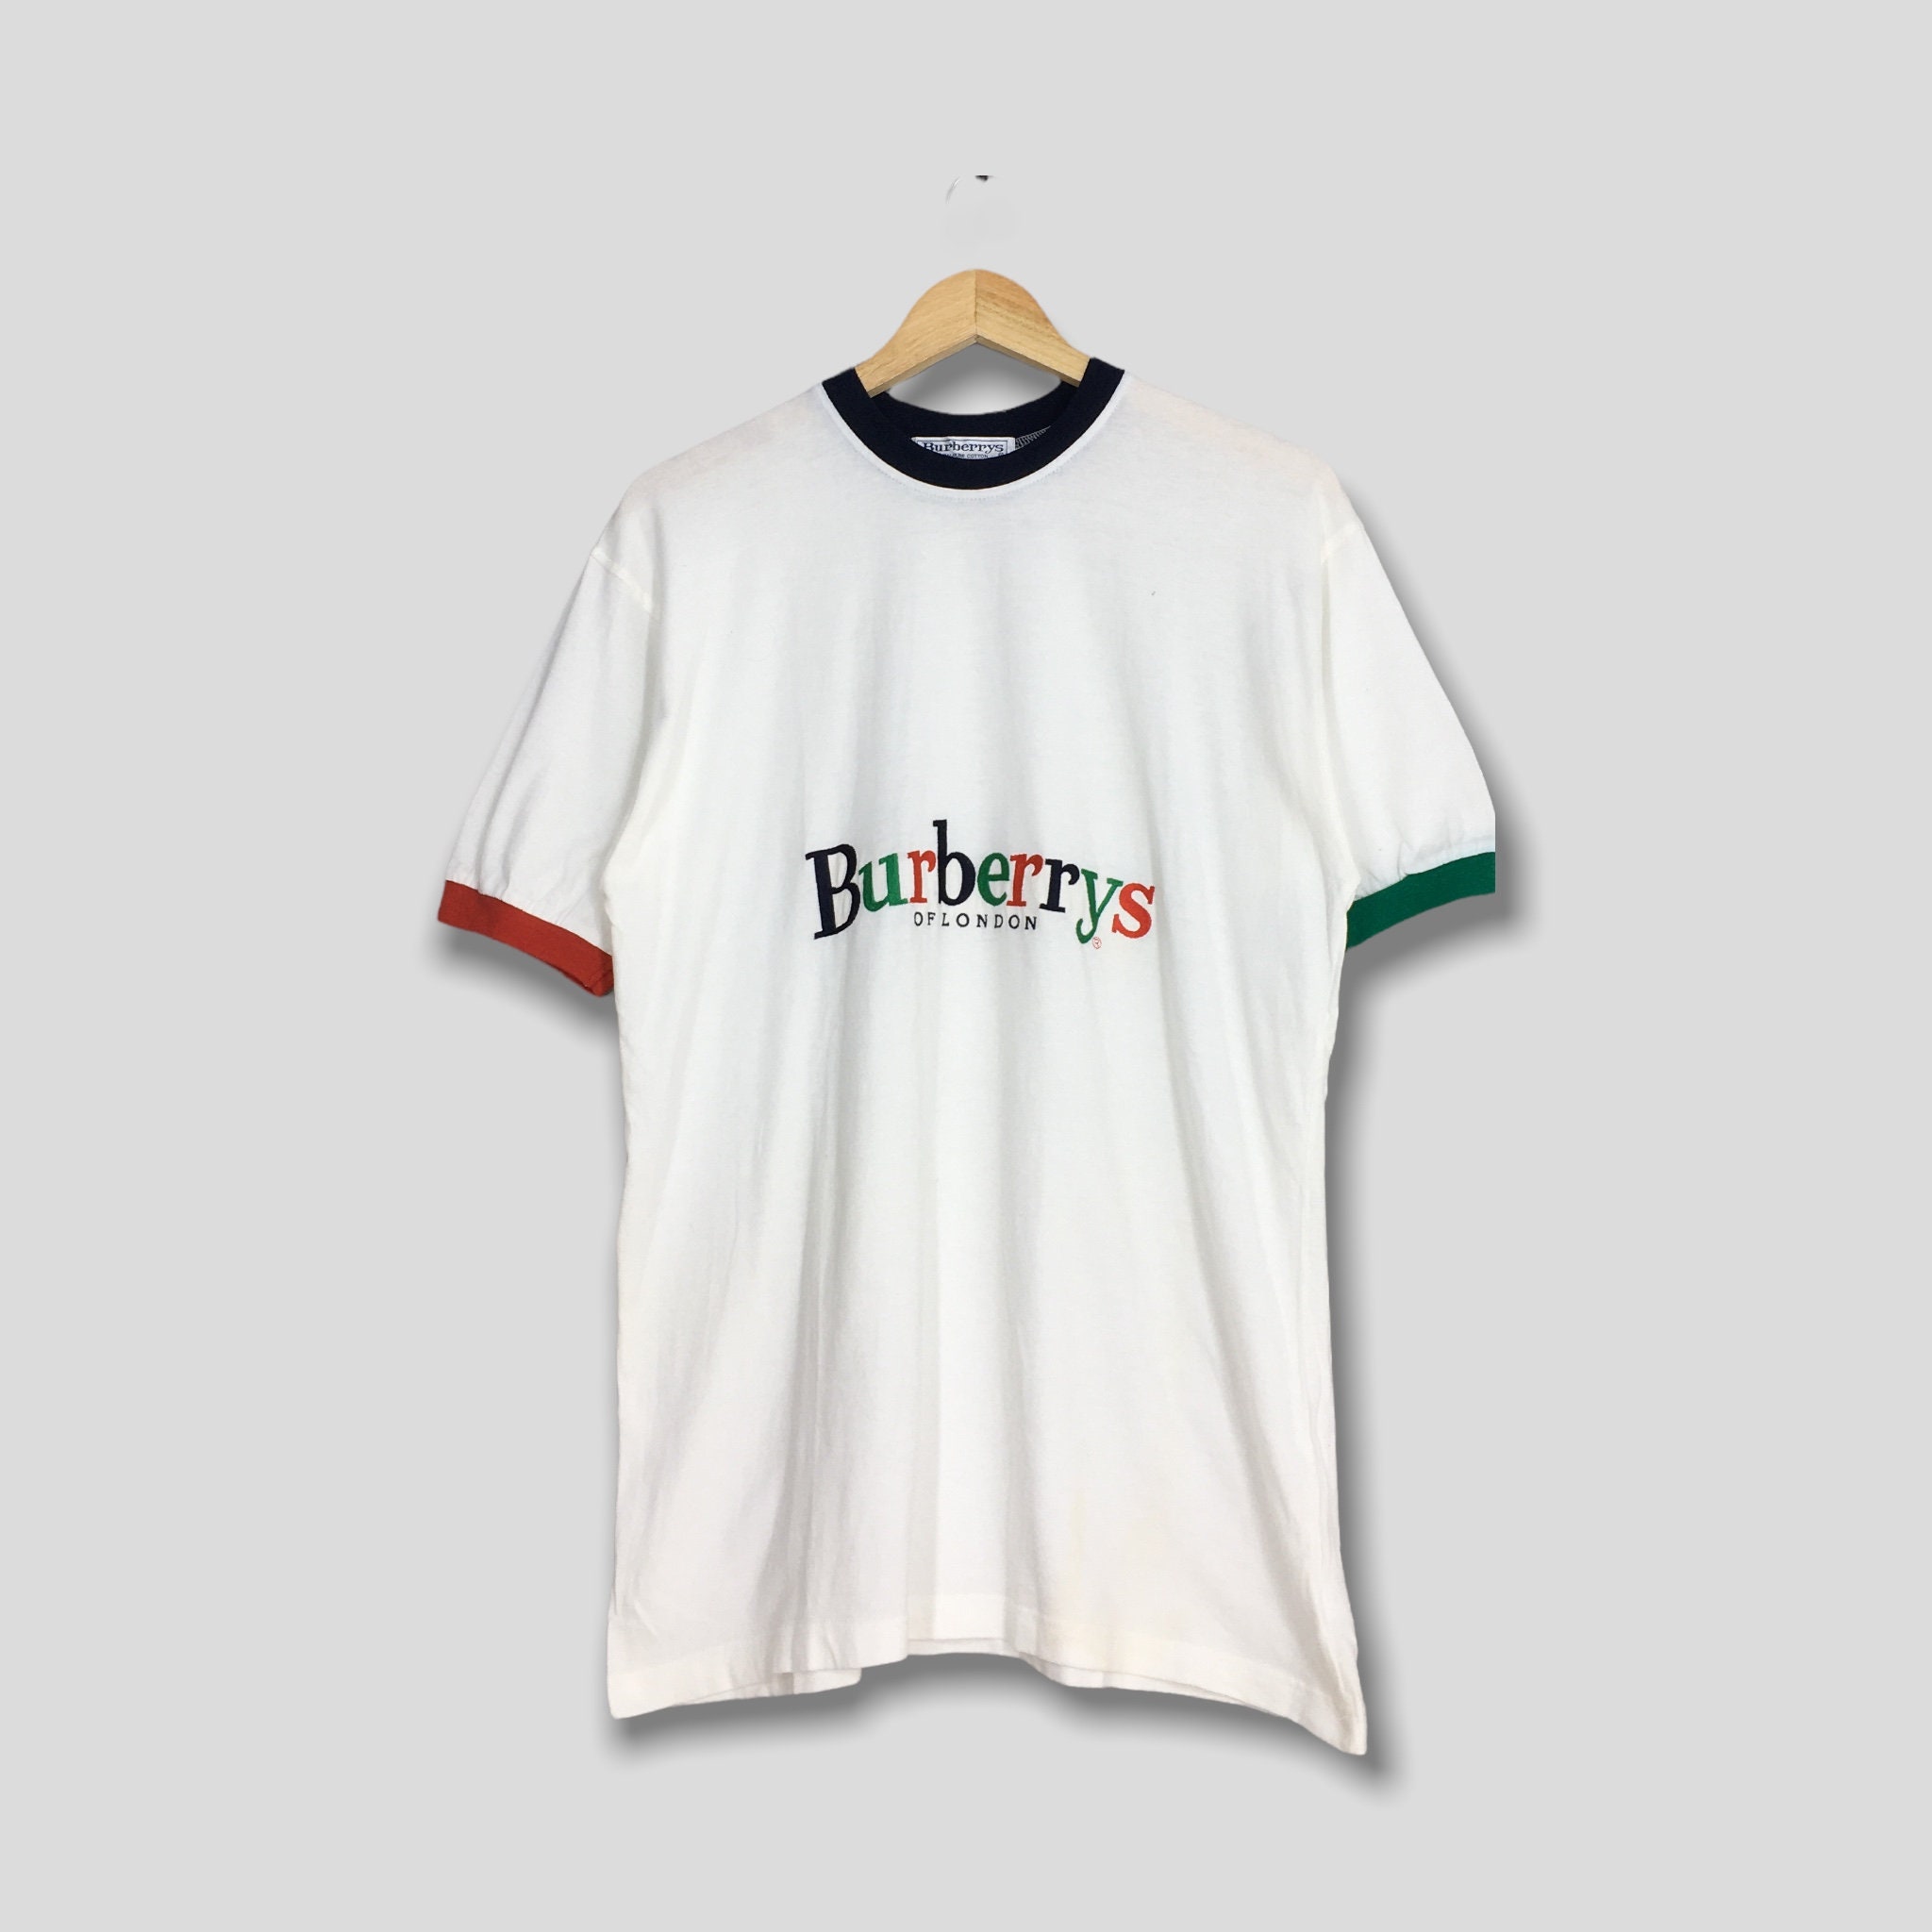 New Playboi Carti printed T-shirt hypebeast vintage 90s rap hip hop t shirt  Fashion Design Casual T Shirt Tops Hipster Men Clothes size XXS to 4XL 